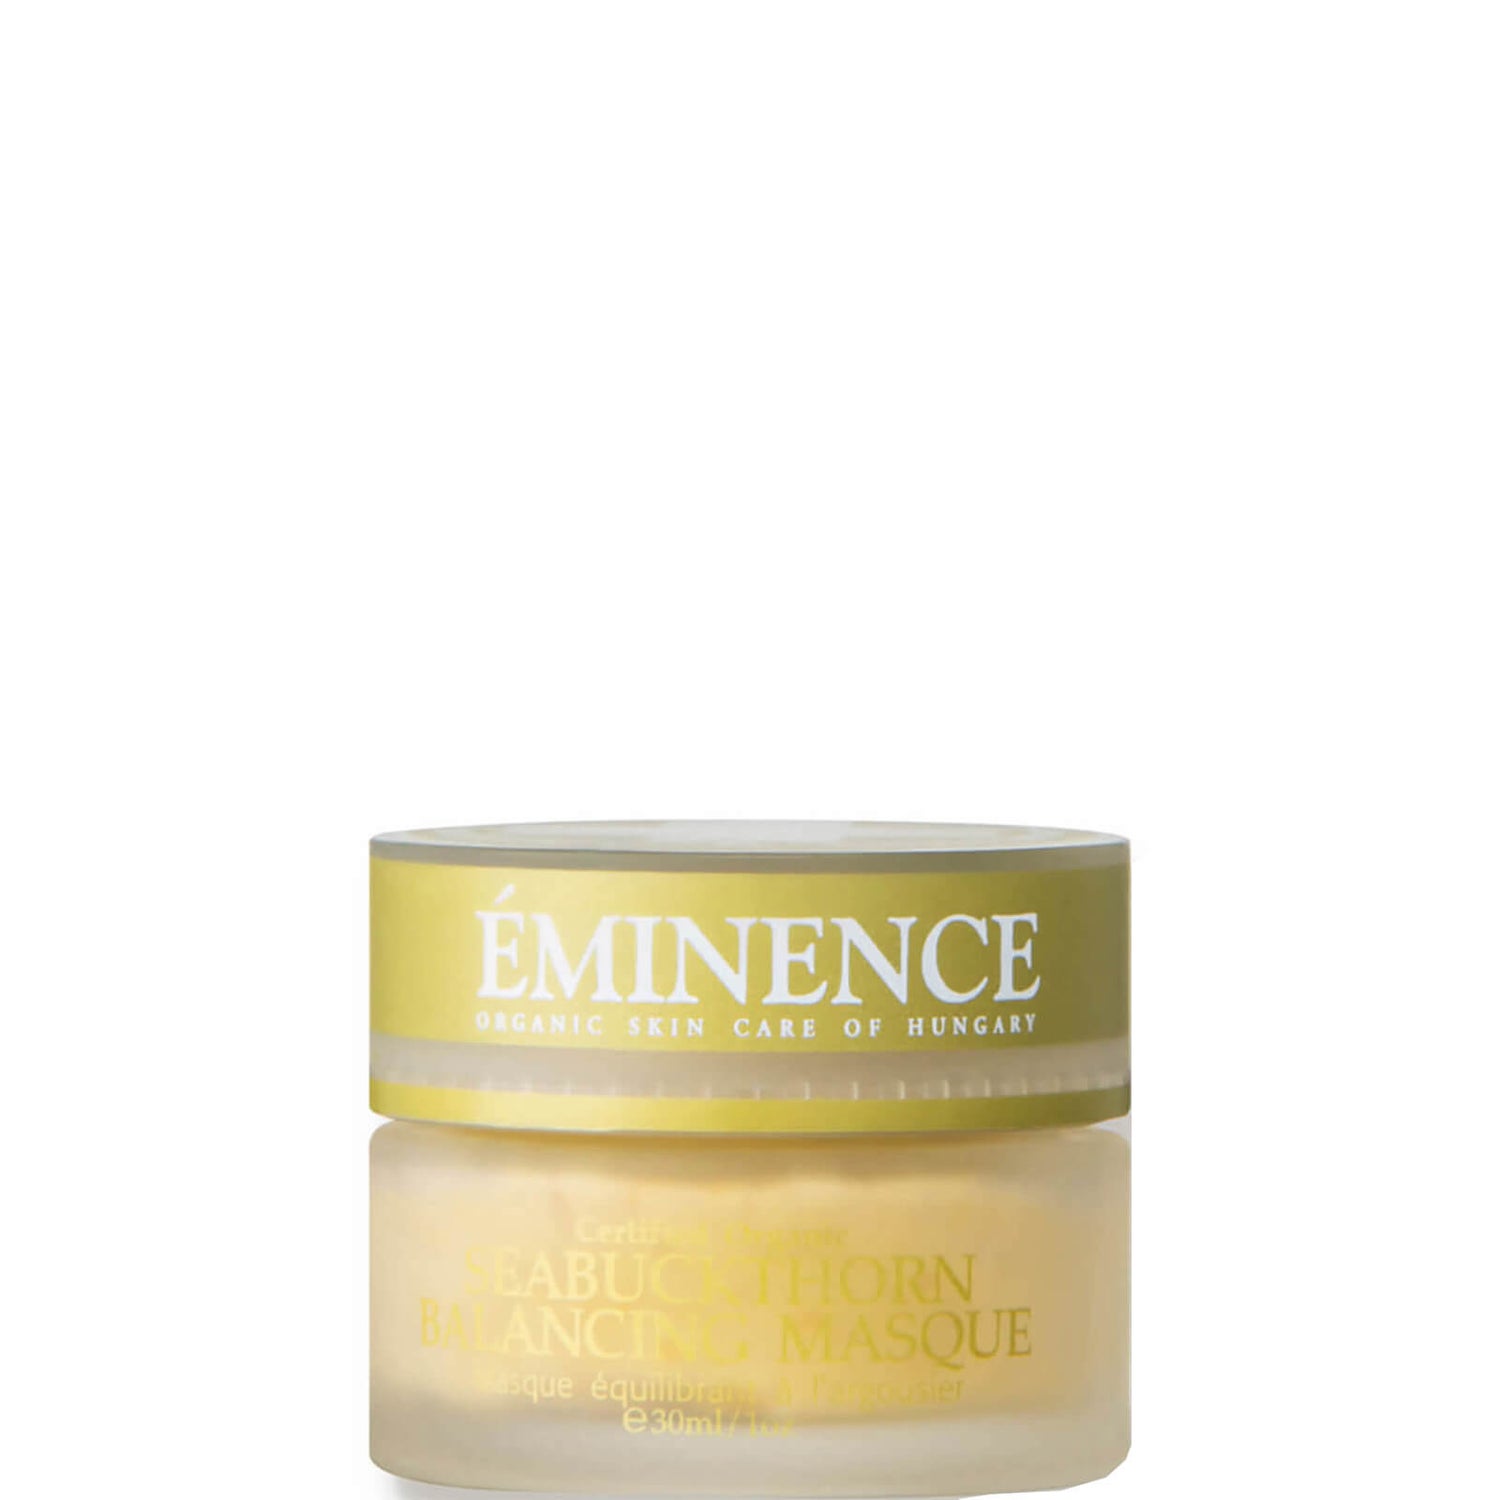 Eminence Organic Skin Care Seabuckthorn Balancing Masque 1 oz